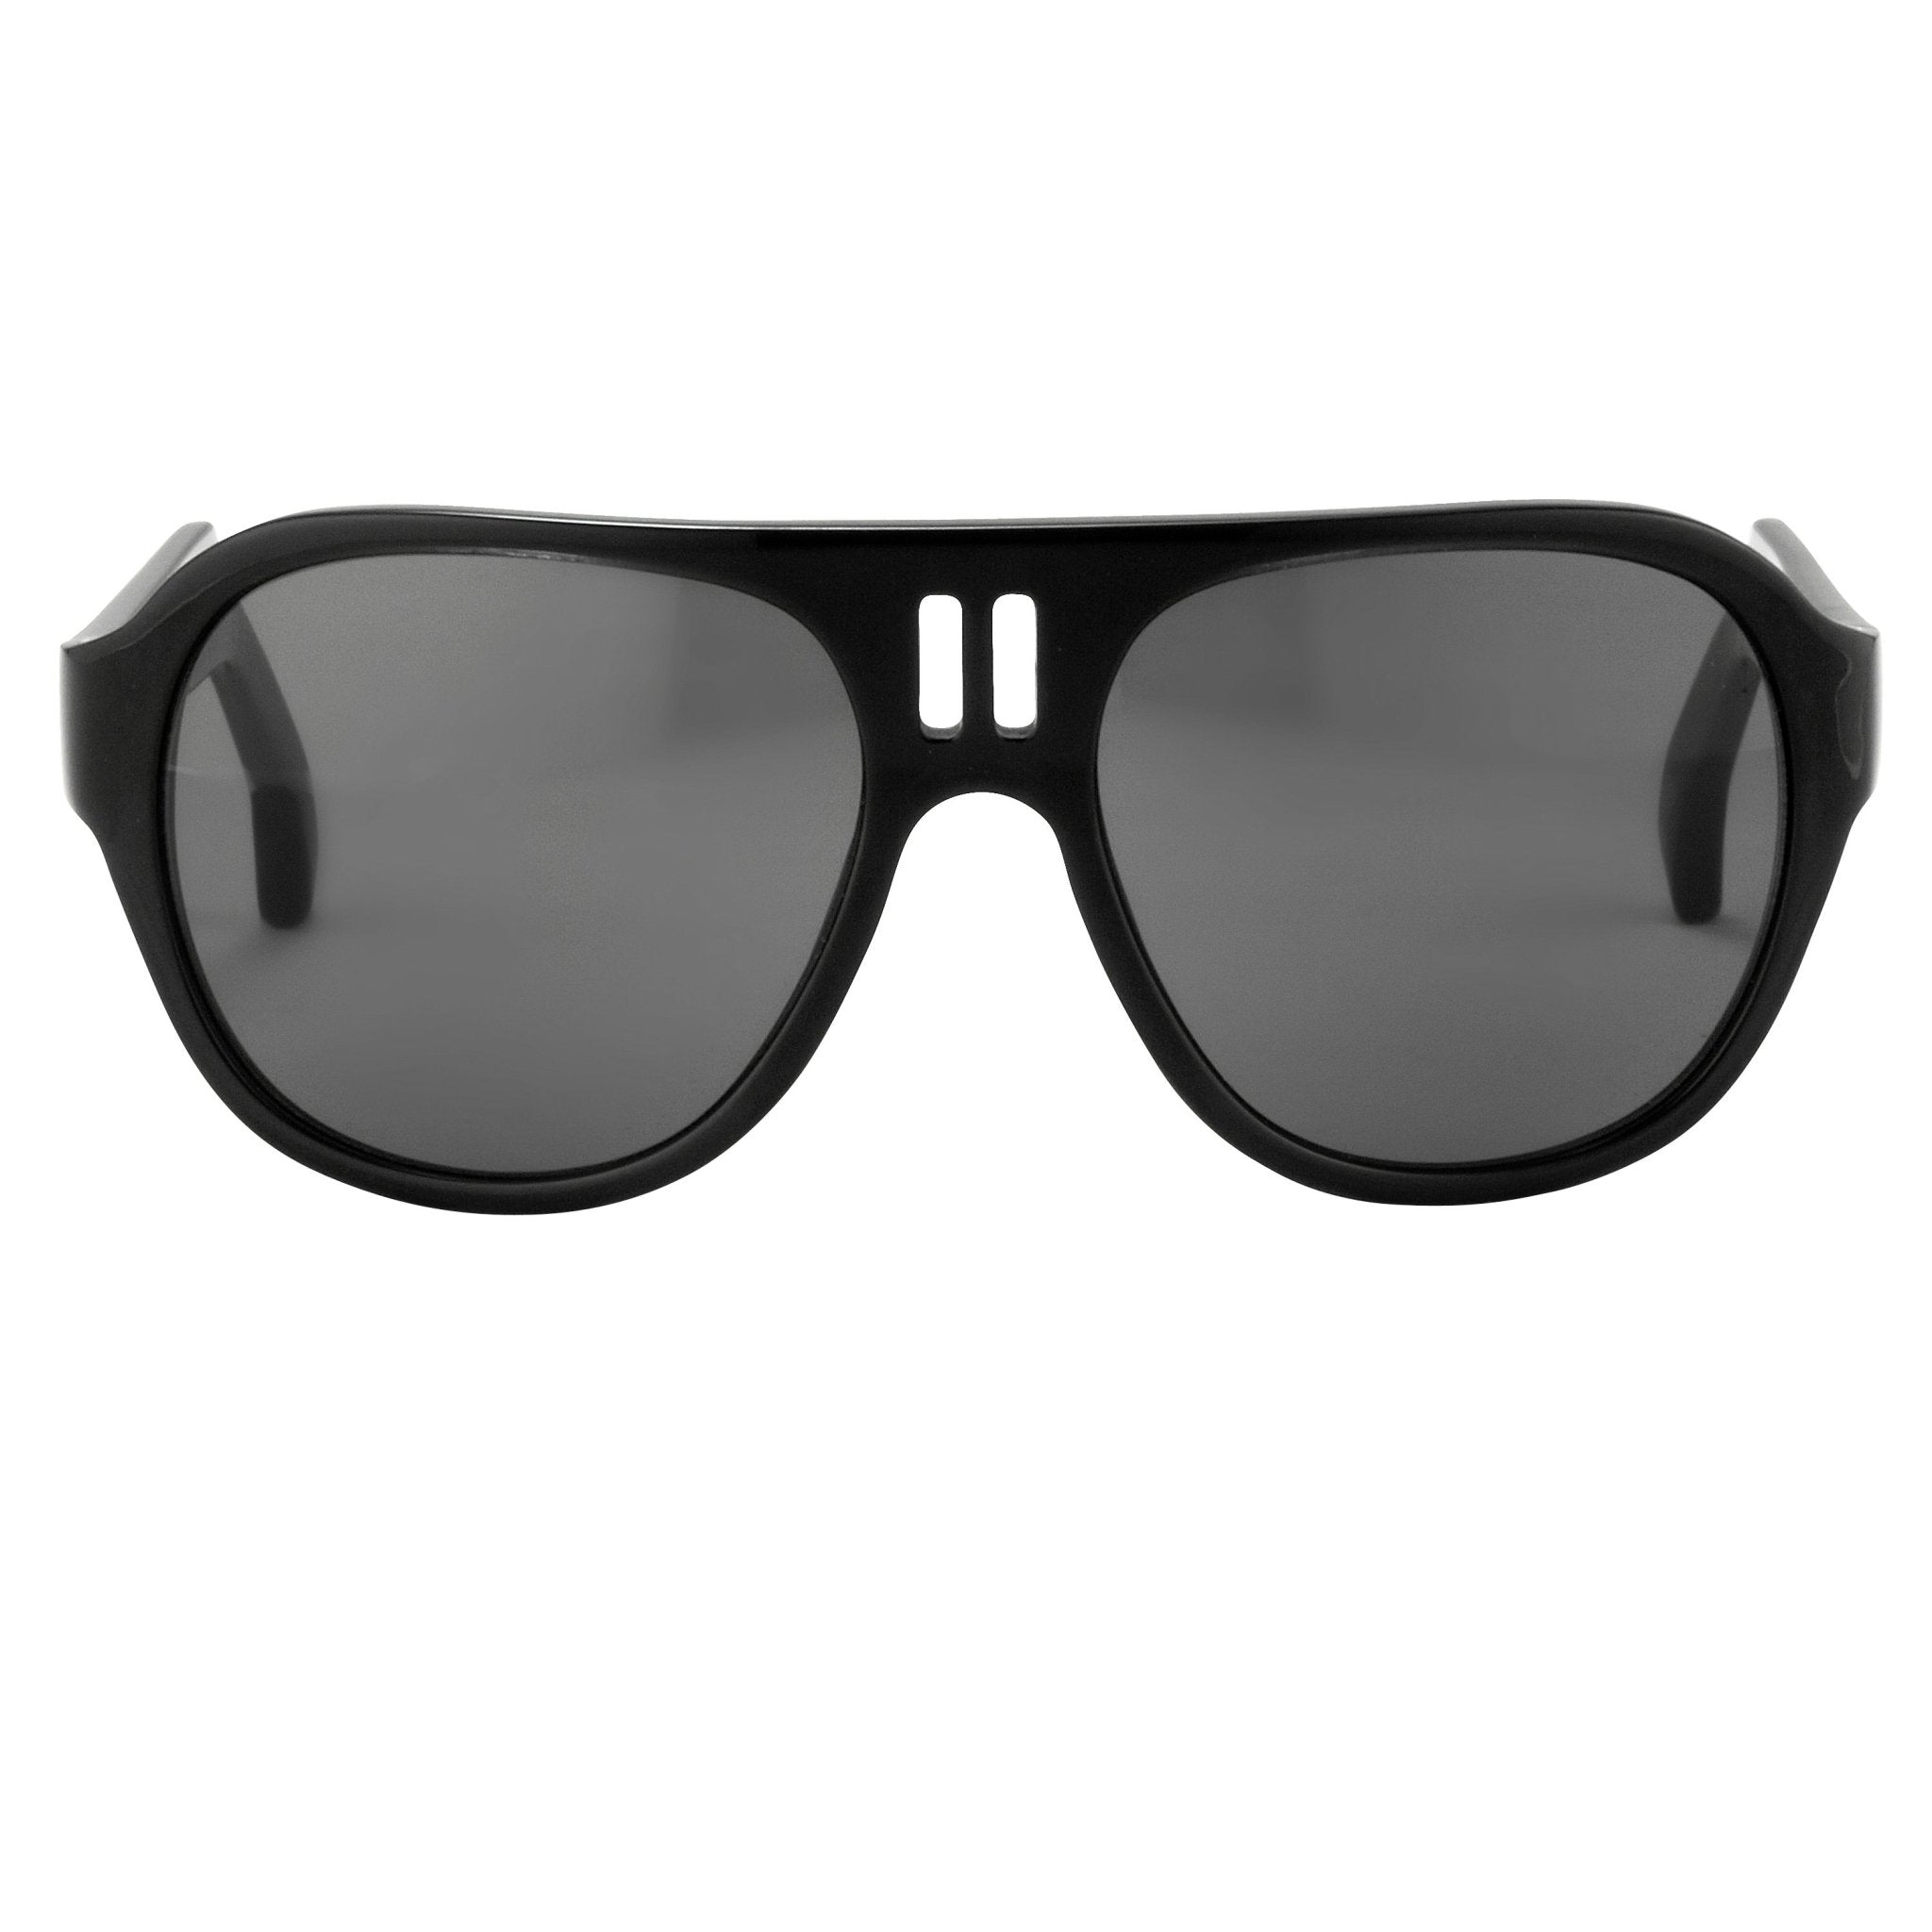 Boris Bidjan Saberi Sunglasses Black With Grey Category 3 Lenses BBS4C2SUN - Watches & Crystals